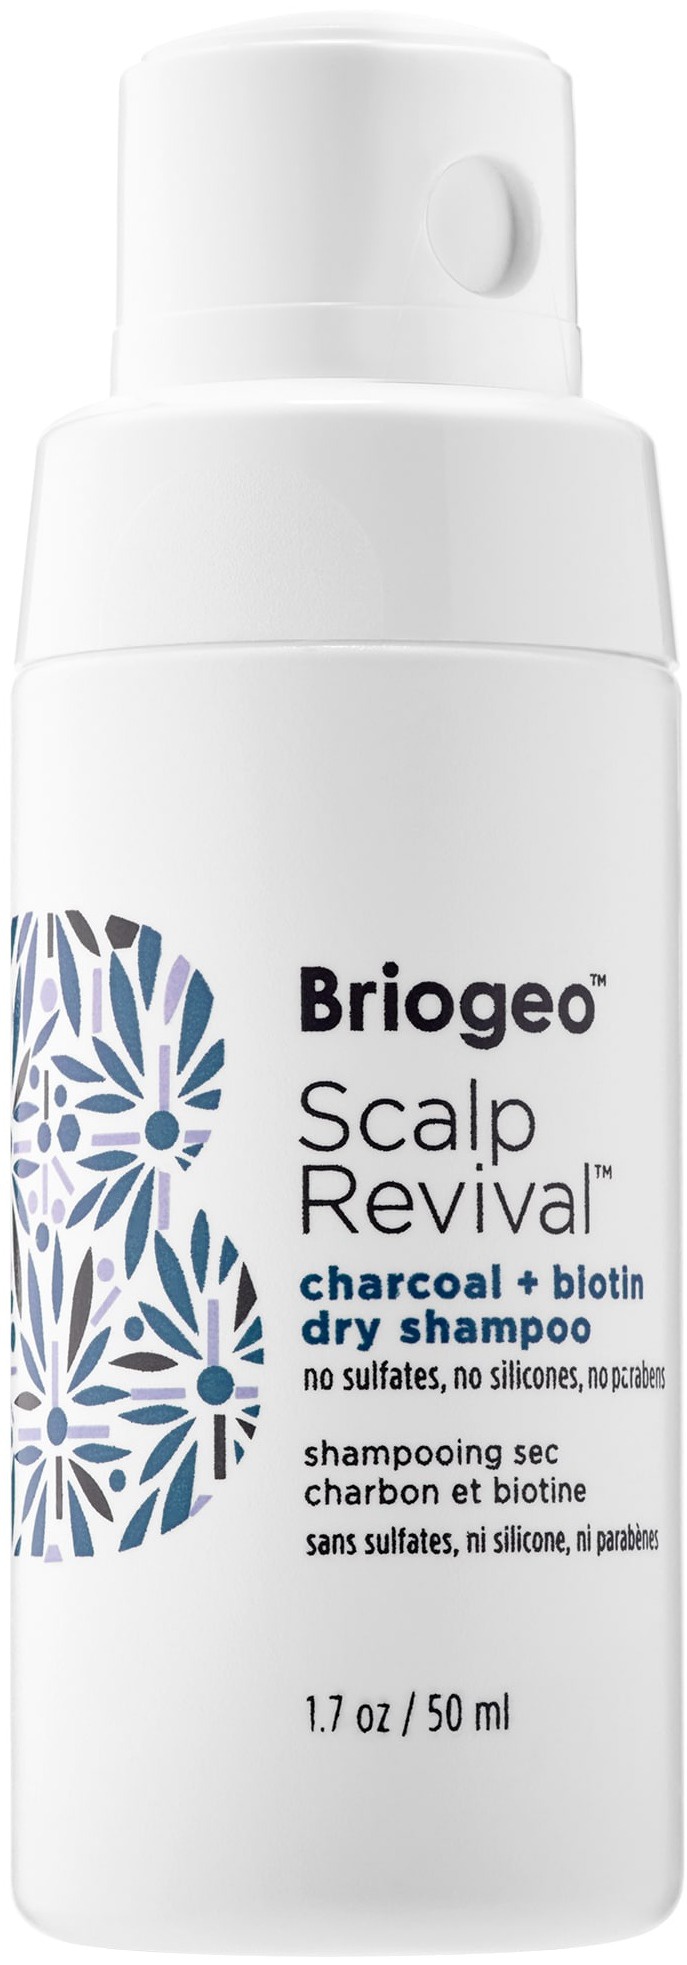 Briogeo Scalp Revival Charcoal + Biogen Dry Shampoo